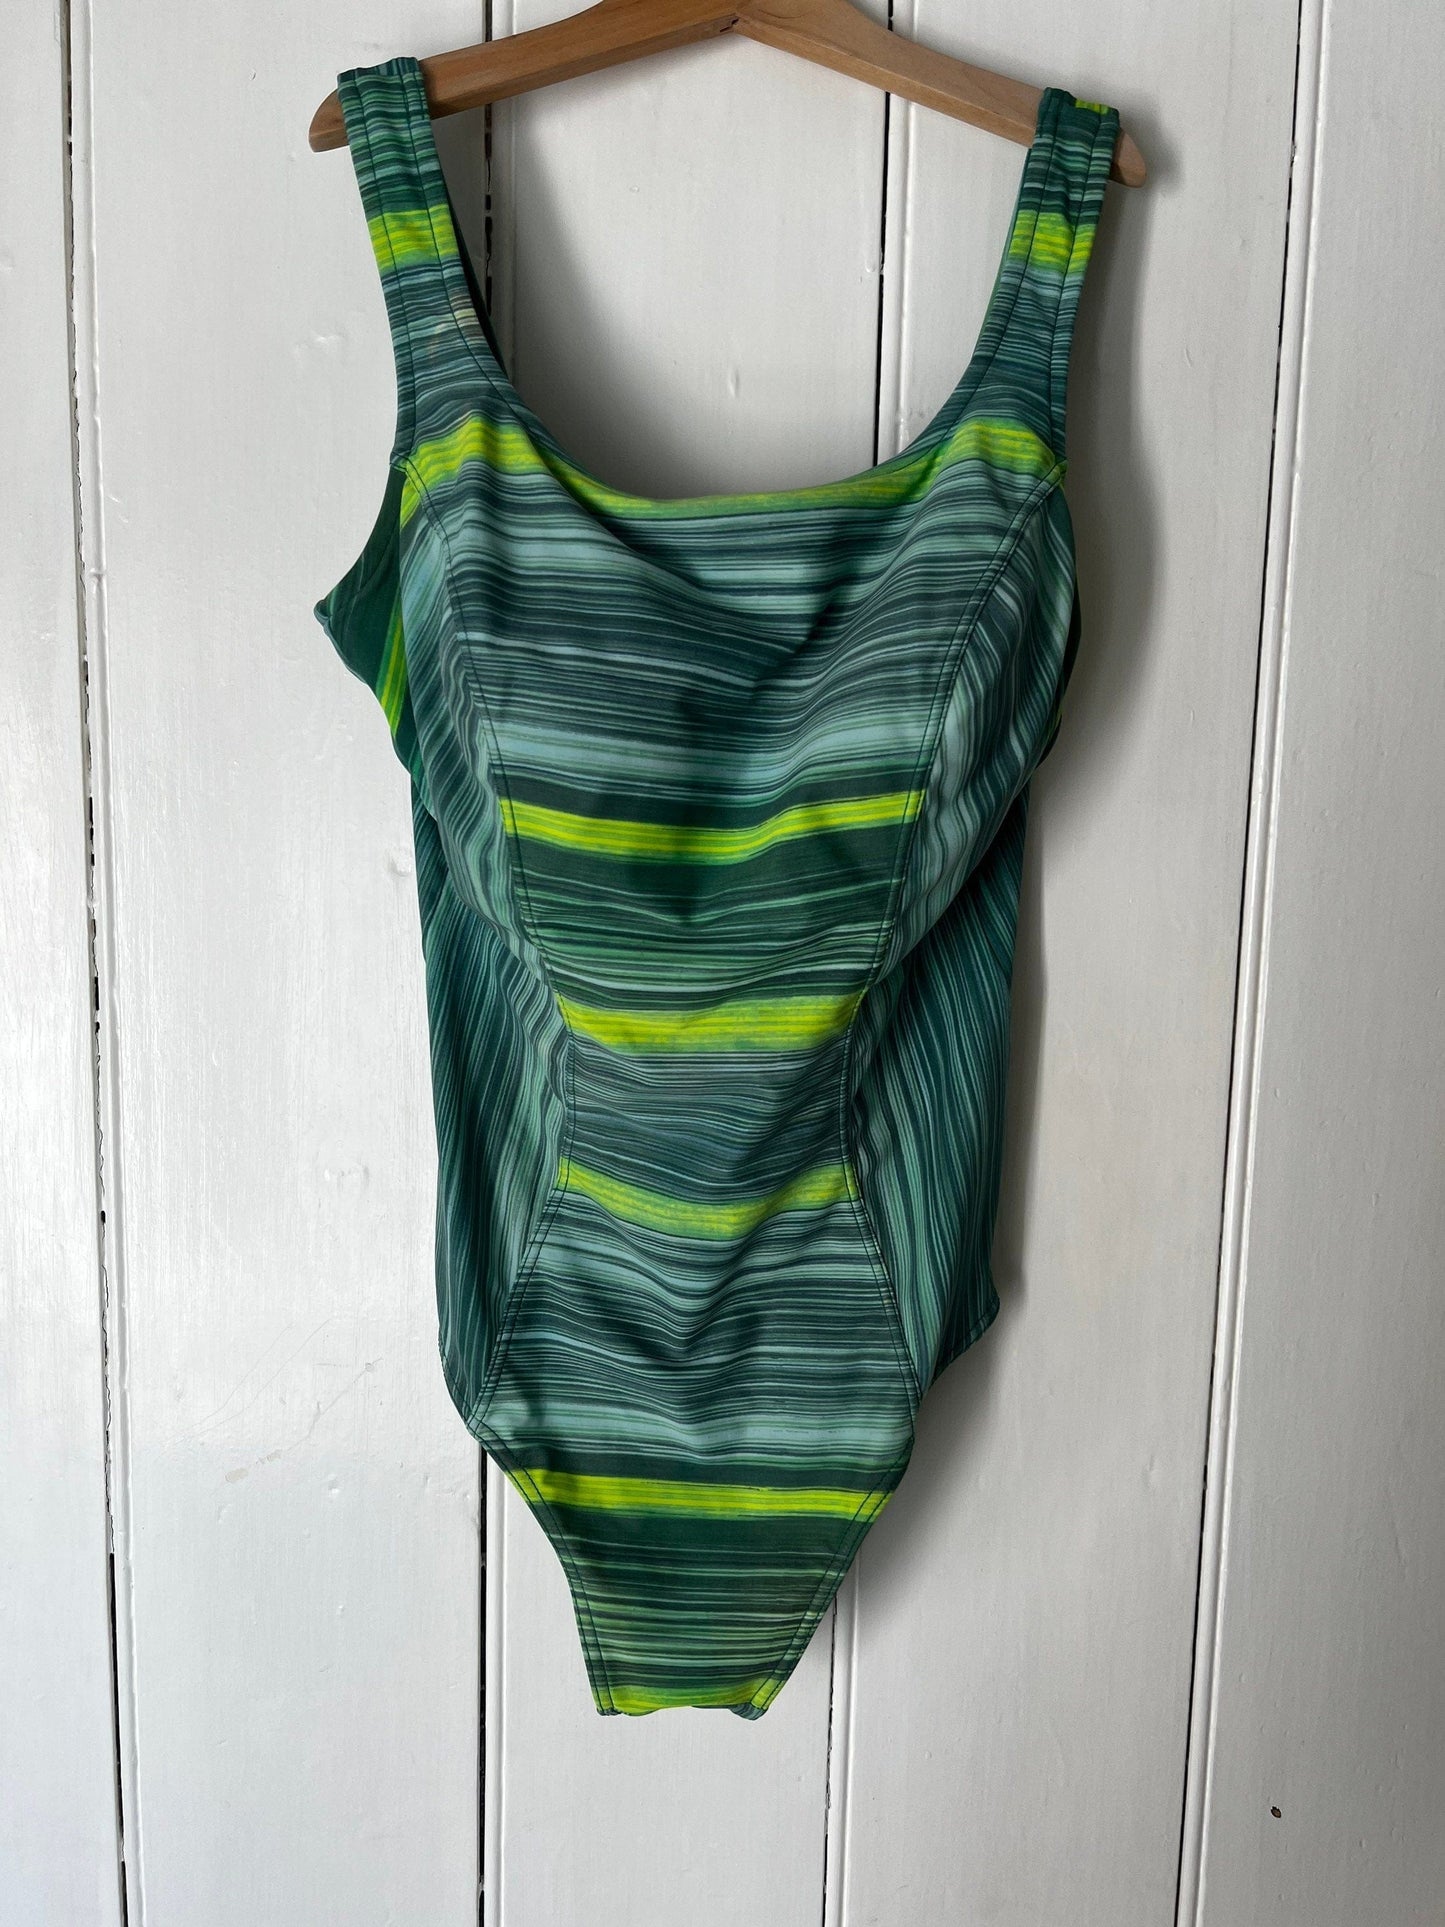 Green Stripe Swimsuit 80s Swimming Costume UK12-14 B cup